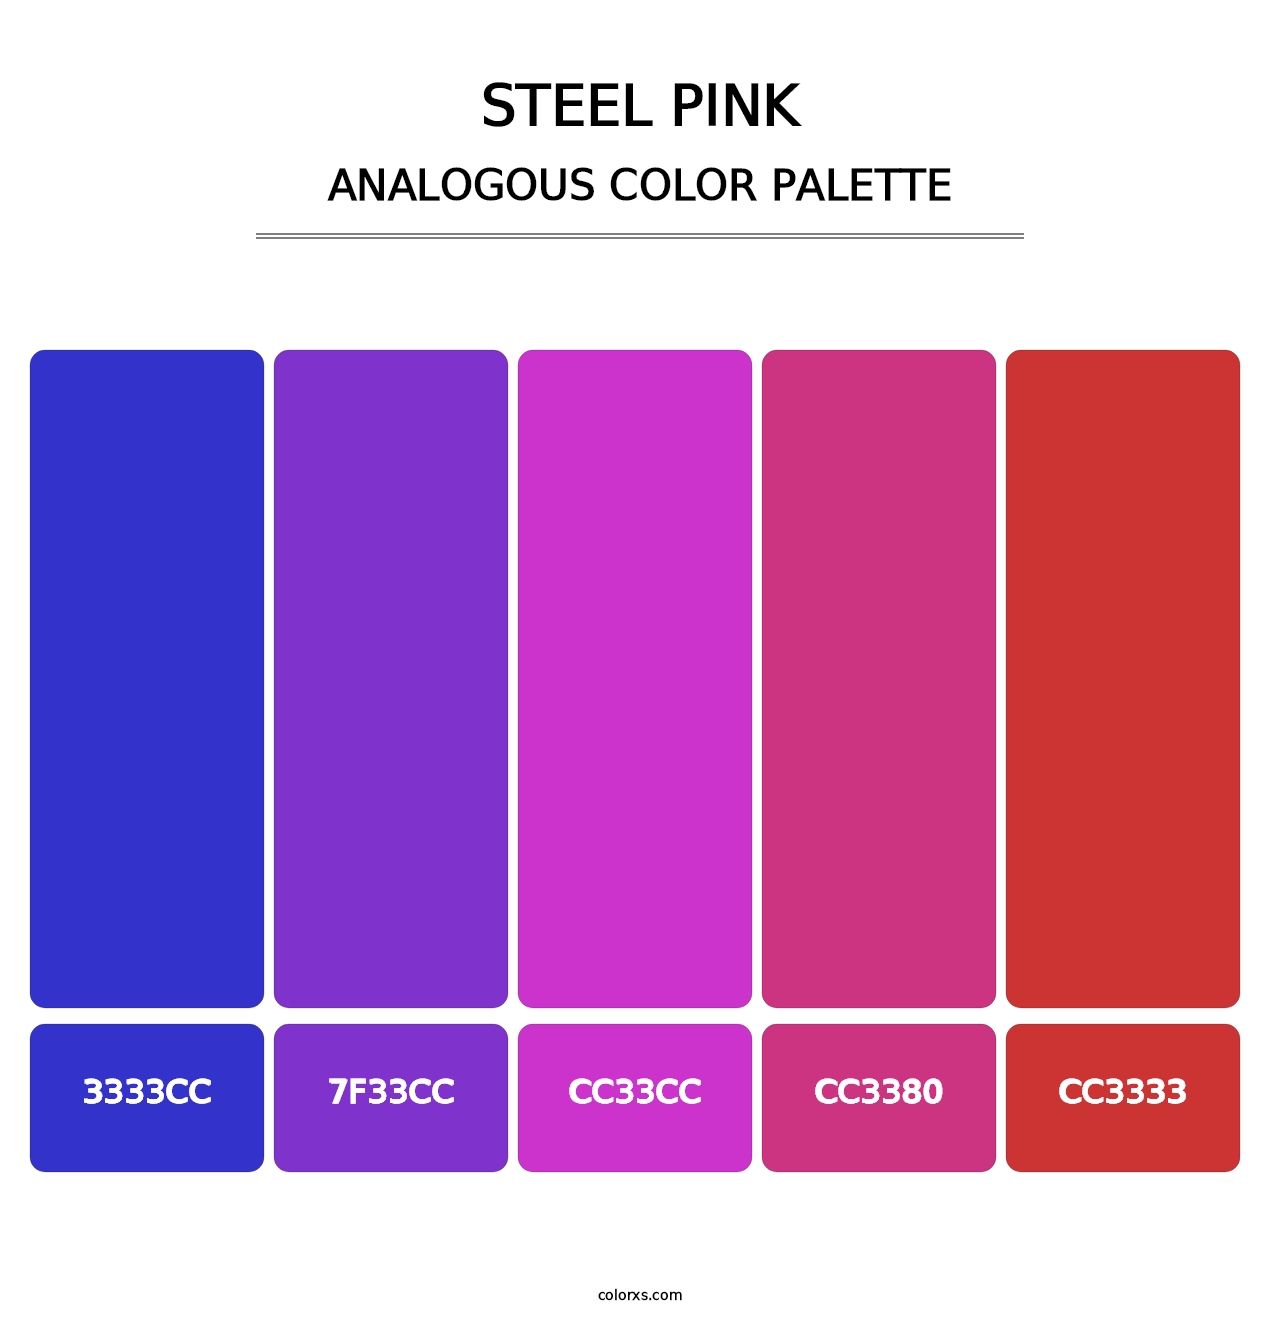 Steel Pink - Analogous Color Palette